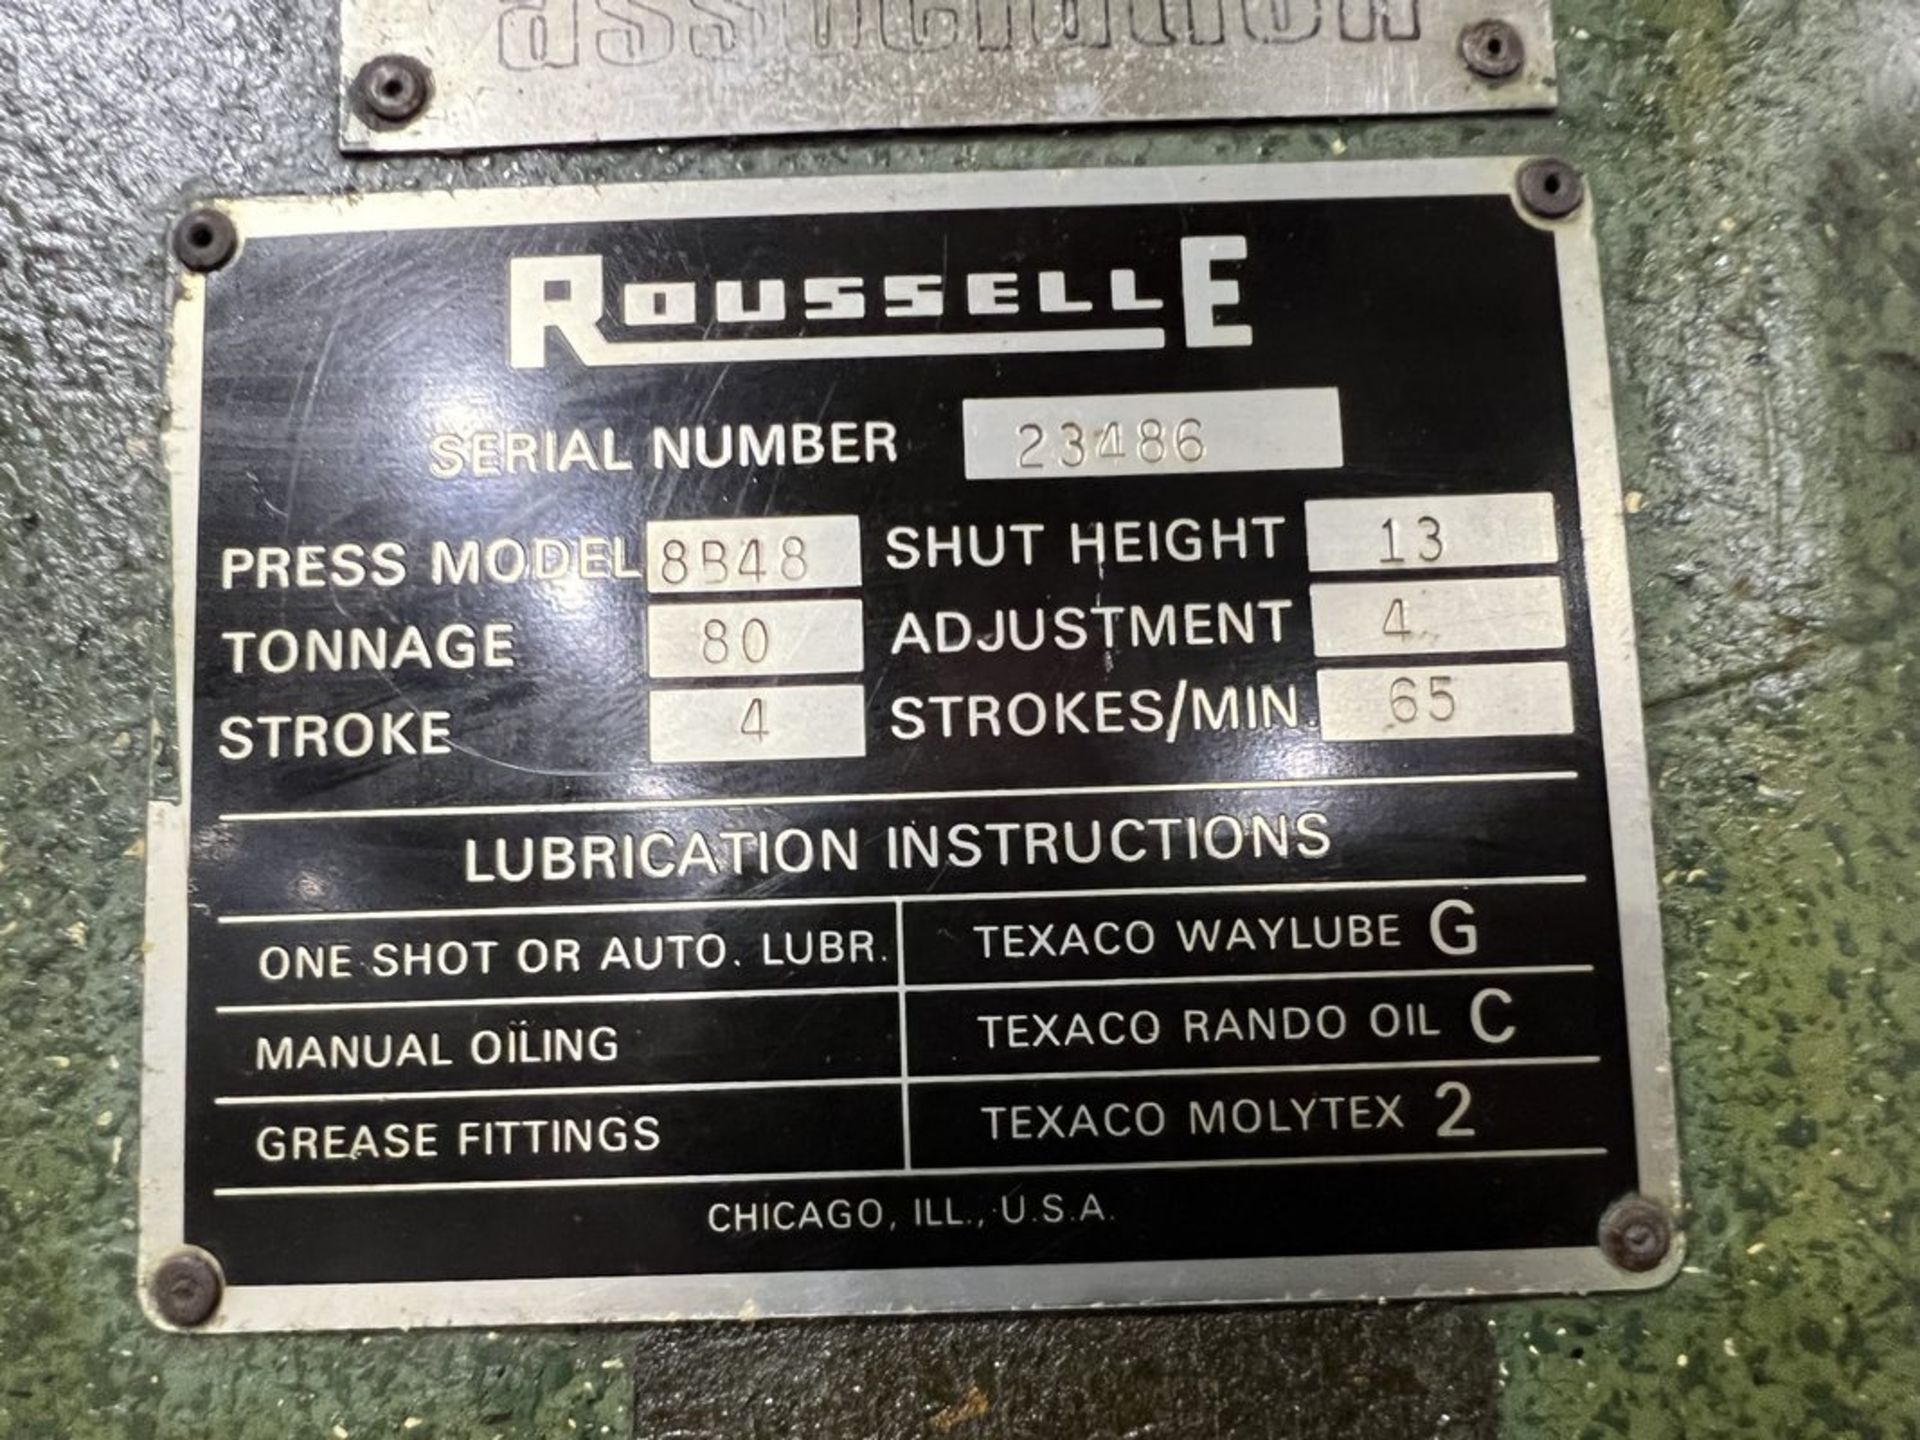 Rousselle 8B48 80-Ton OBI Double Crank Punch Press, S/N 23486 - Image 4 of 9